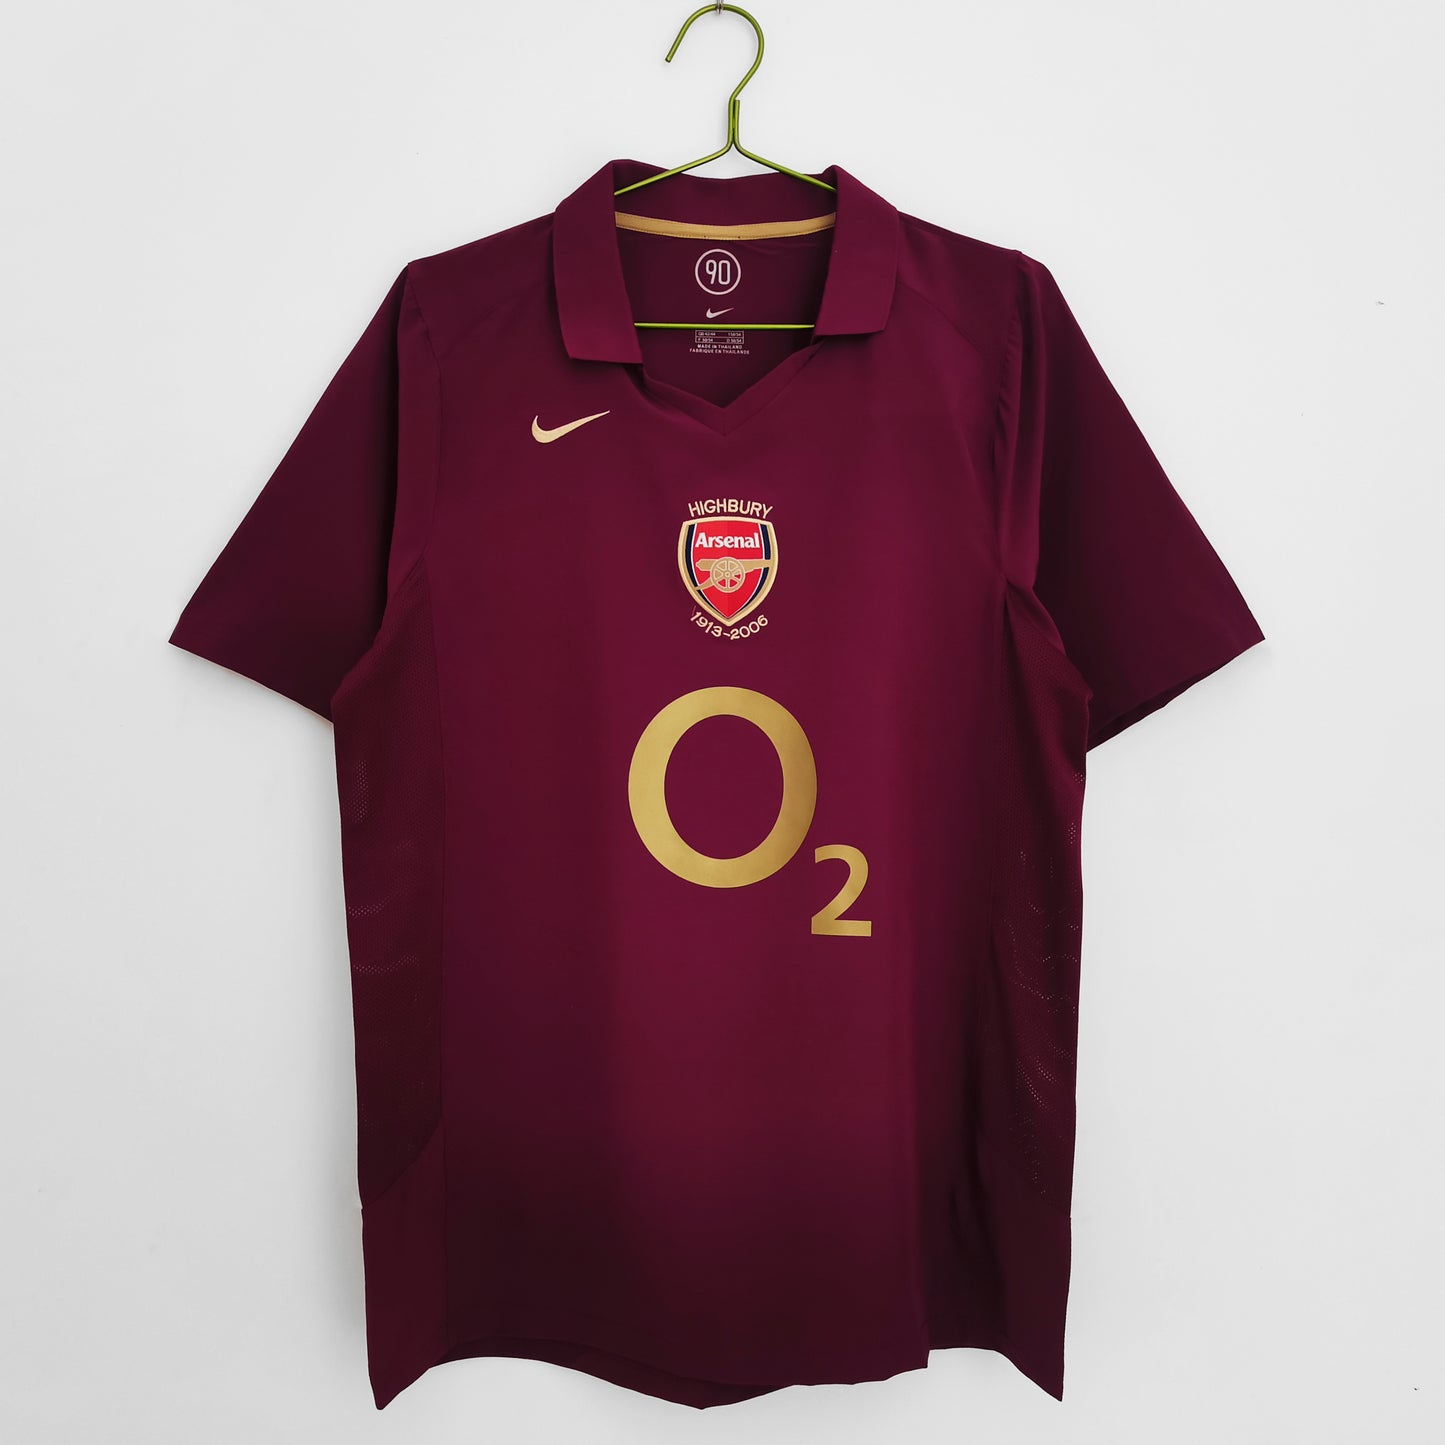 Arsenal vintage jersey 2005/2006